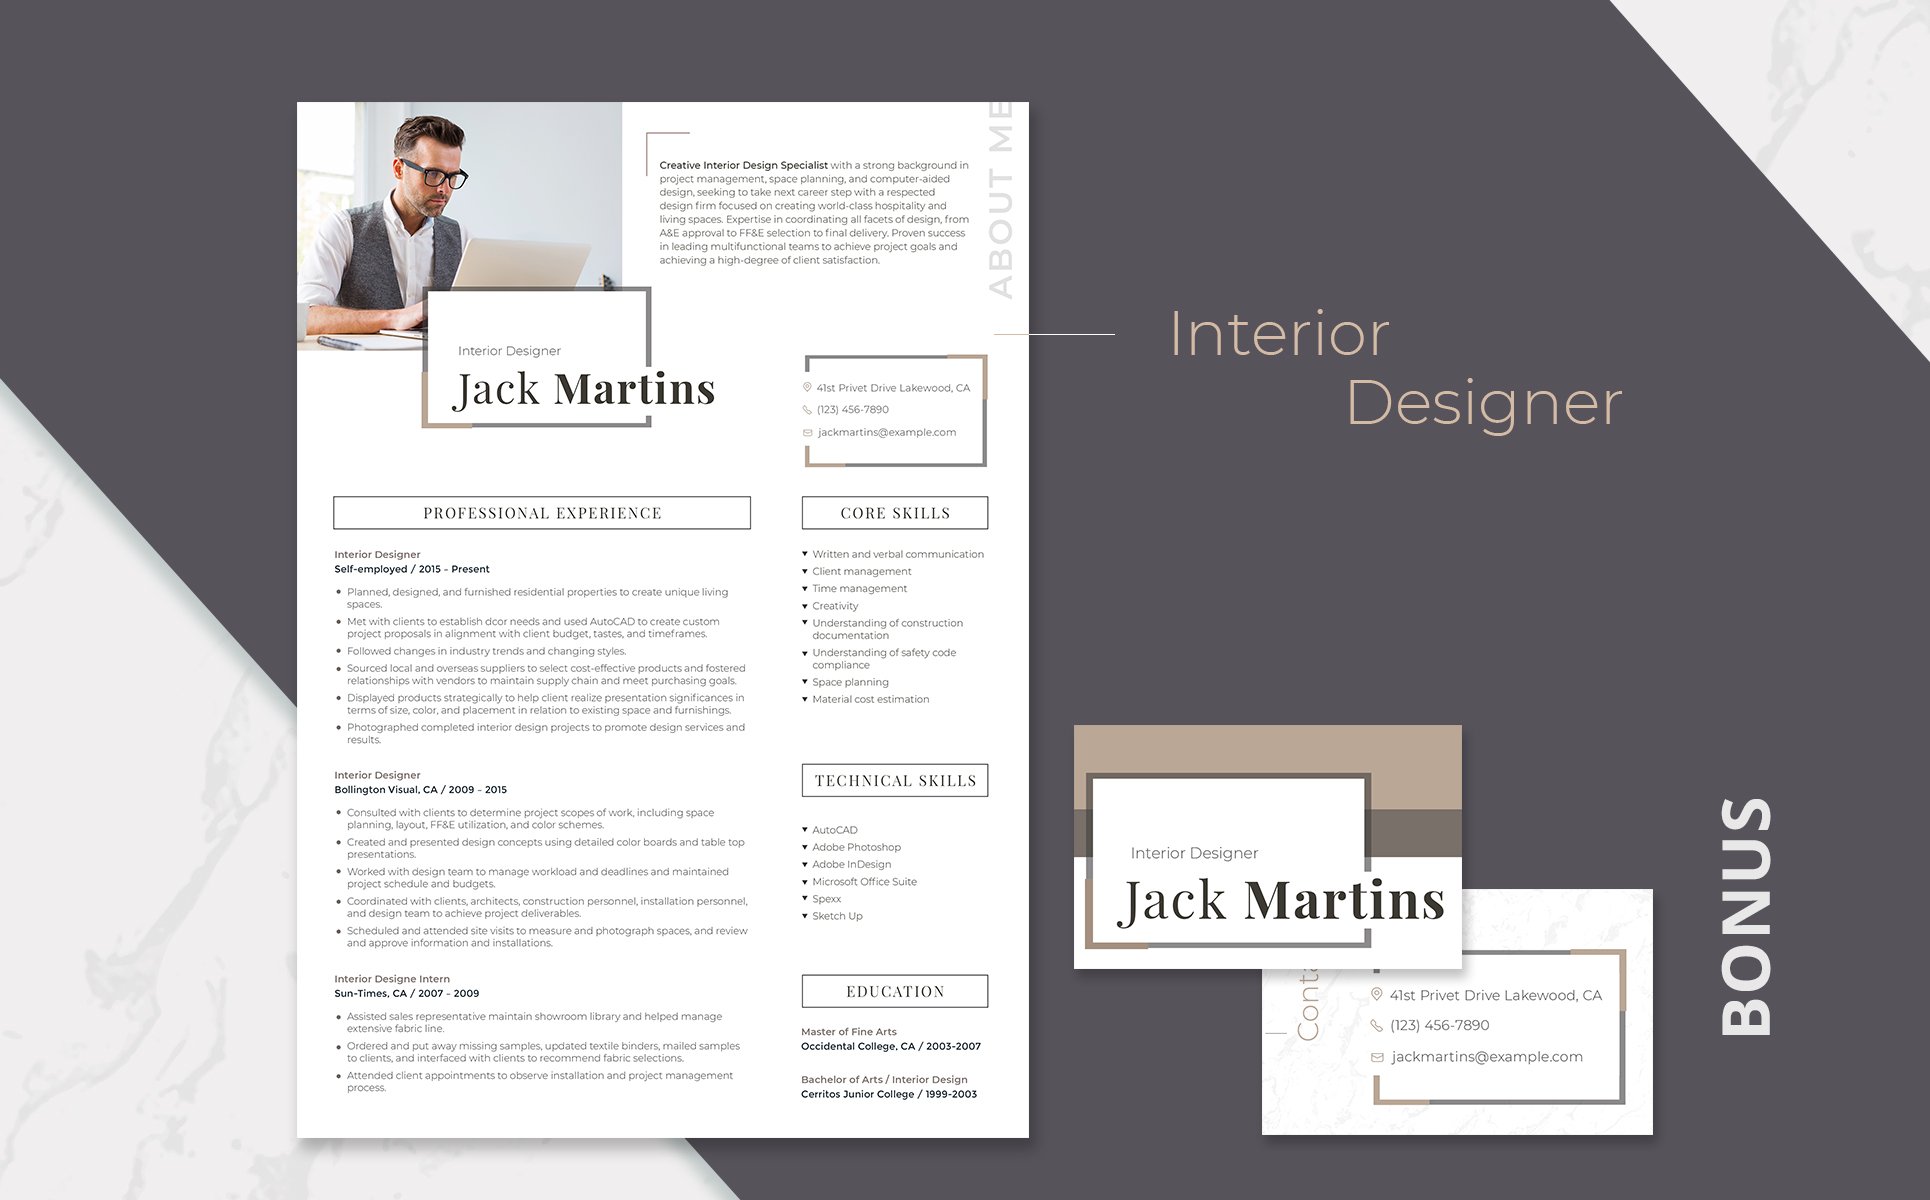 Jack Martins - Interior Designer Template Modelo de Currículo №664371930 x 1200